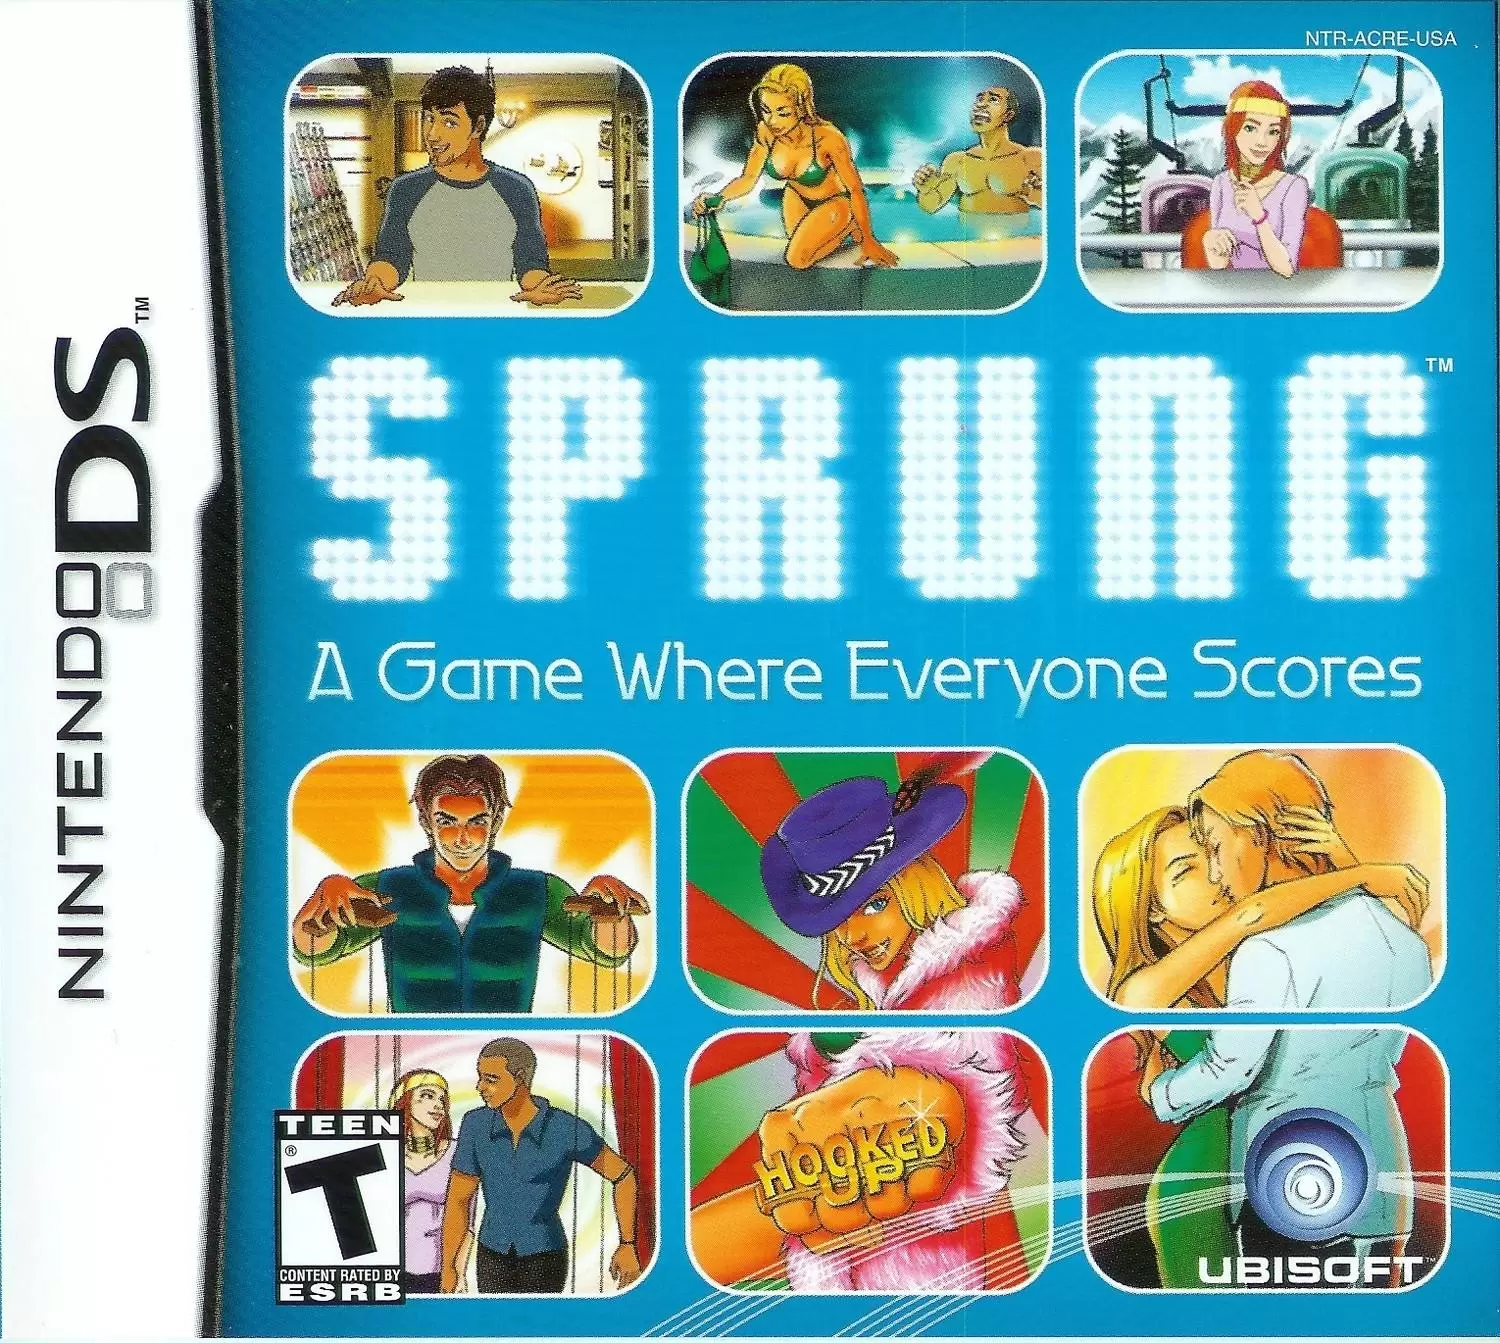 Nintendo DS Games - Sprung